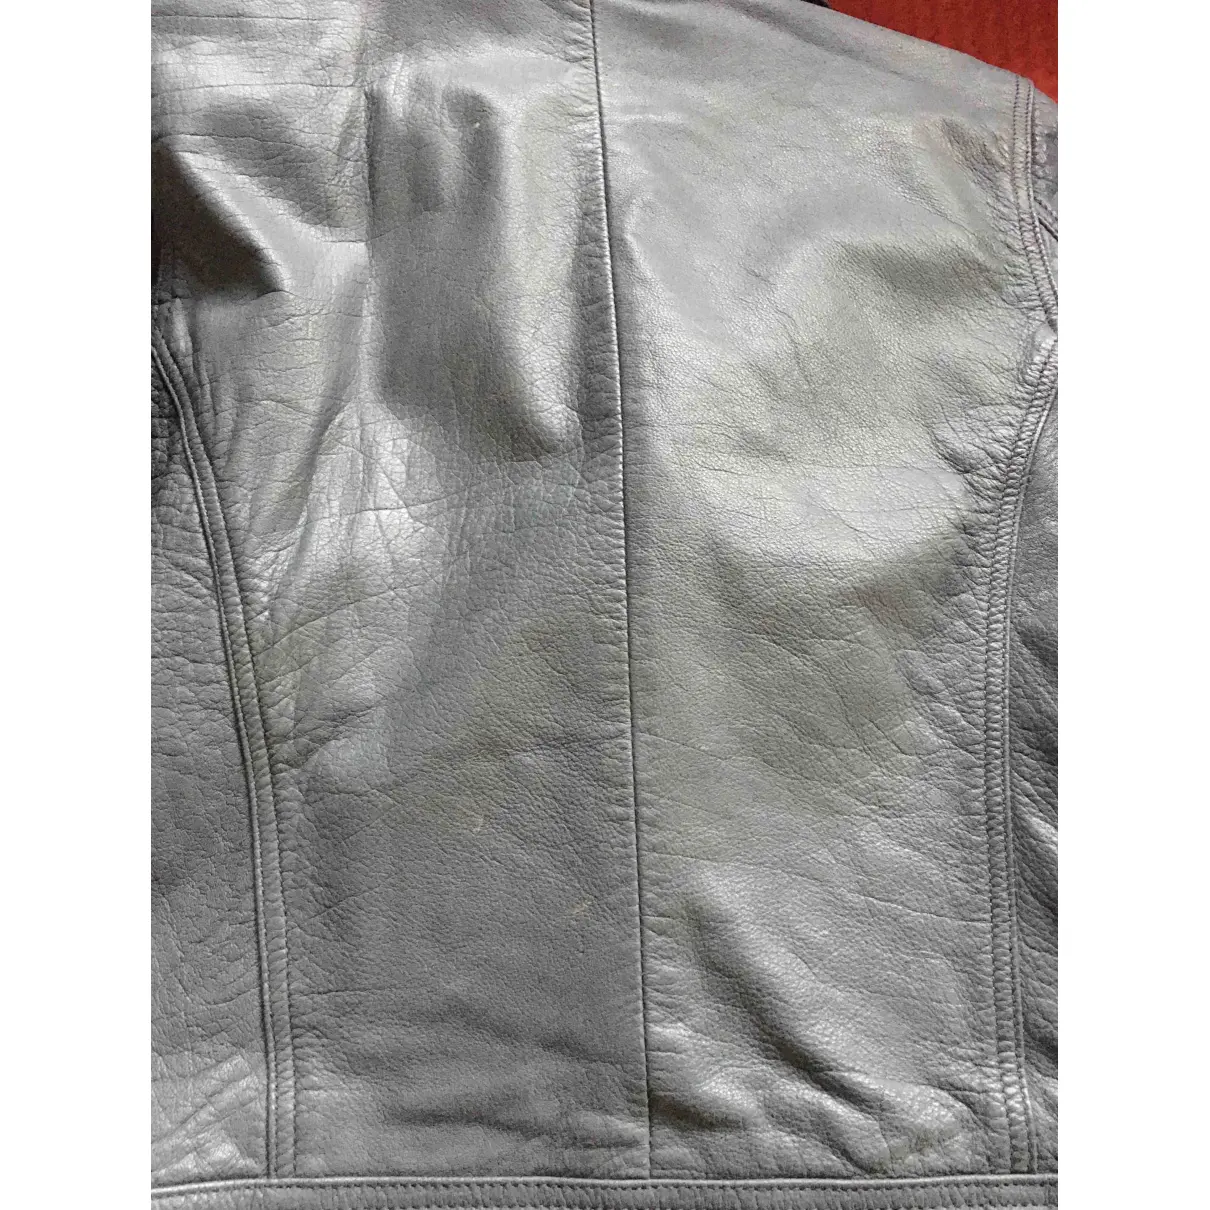 Buy Wrangler Leather jacket online